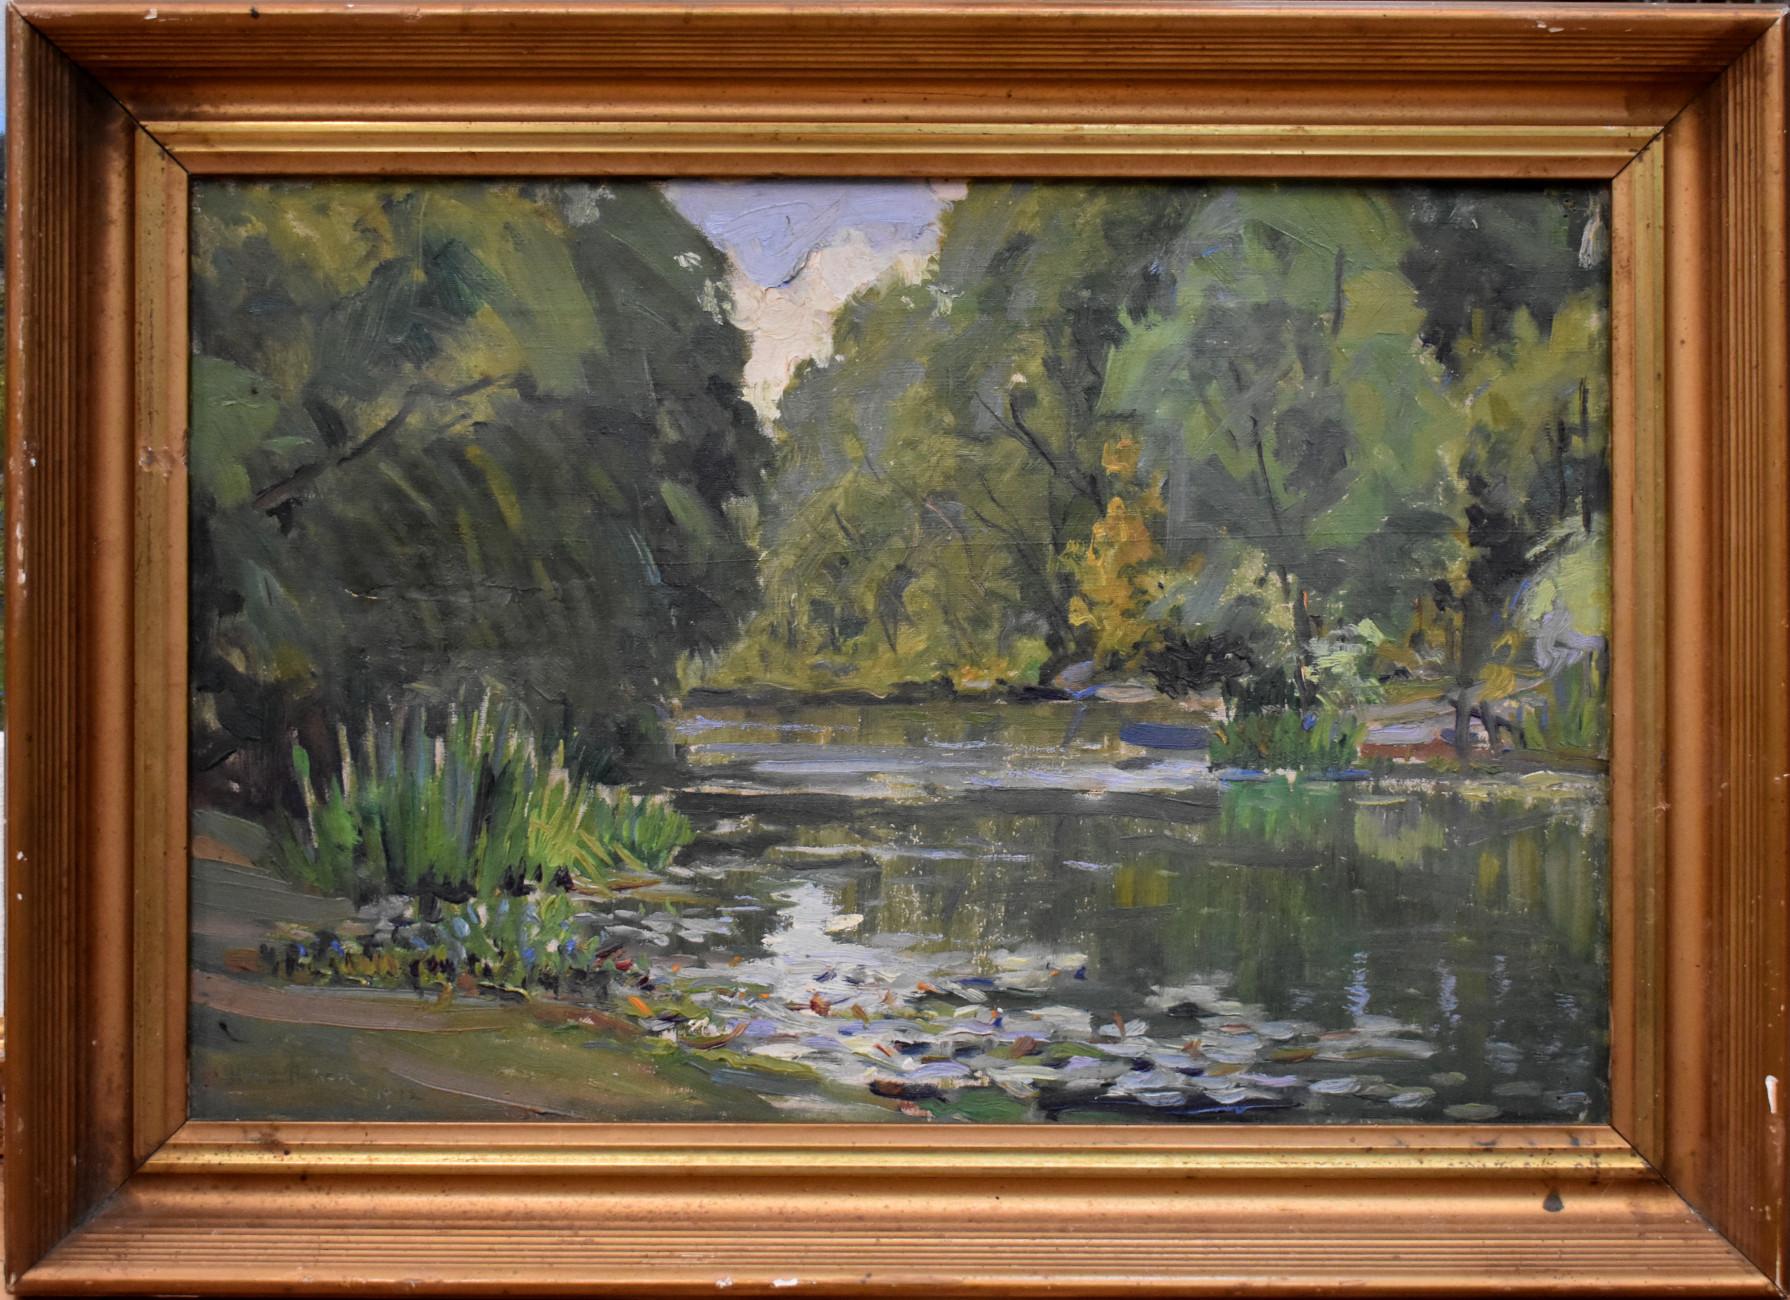 Olive Brack Landscape Painting - "LILY PADS" DATED 1912.  SAN ANTONIO RIVER. OLIVE BRACK (1890-1957)